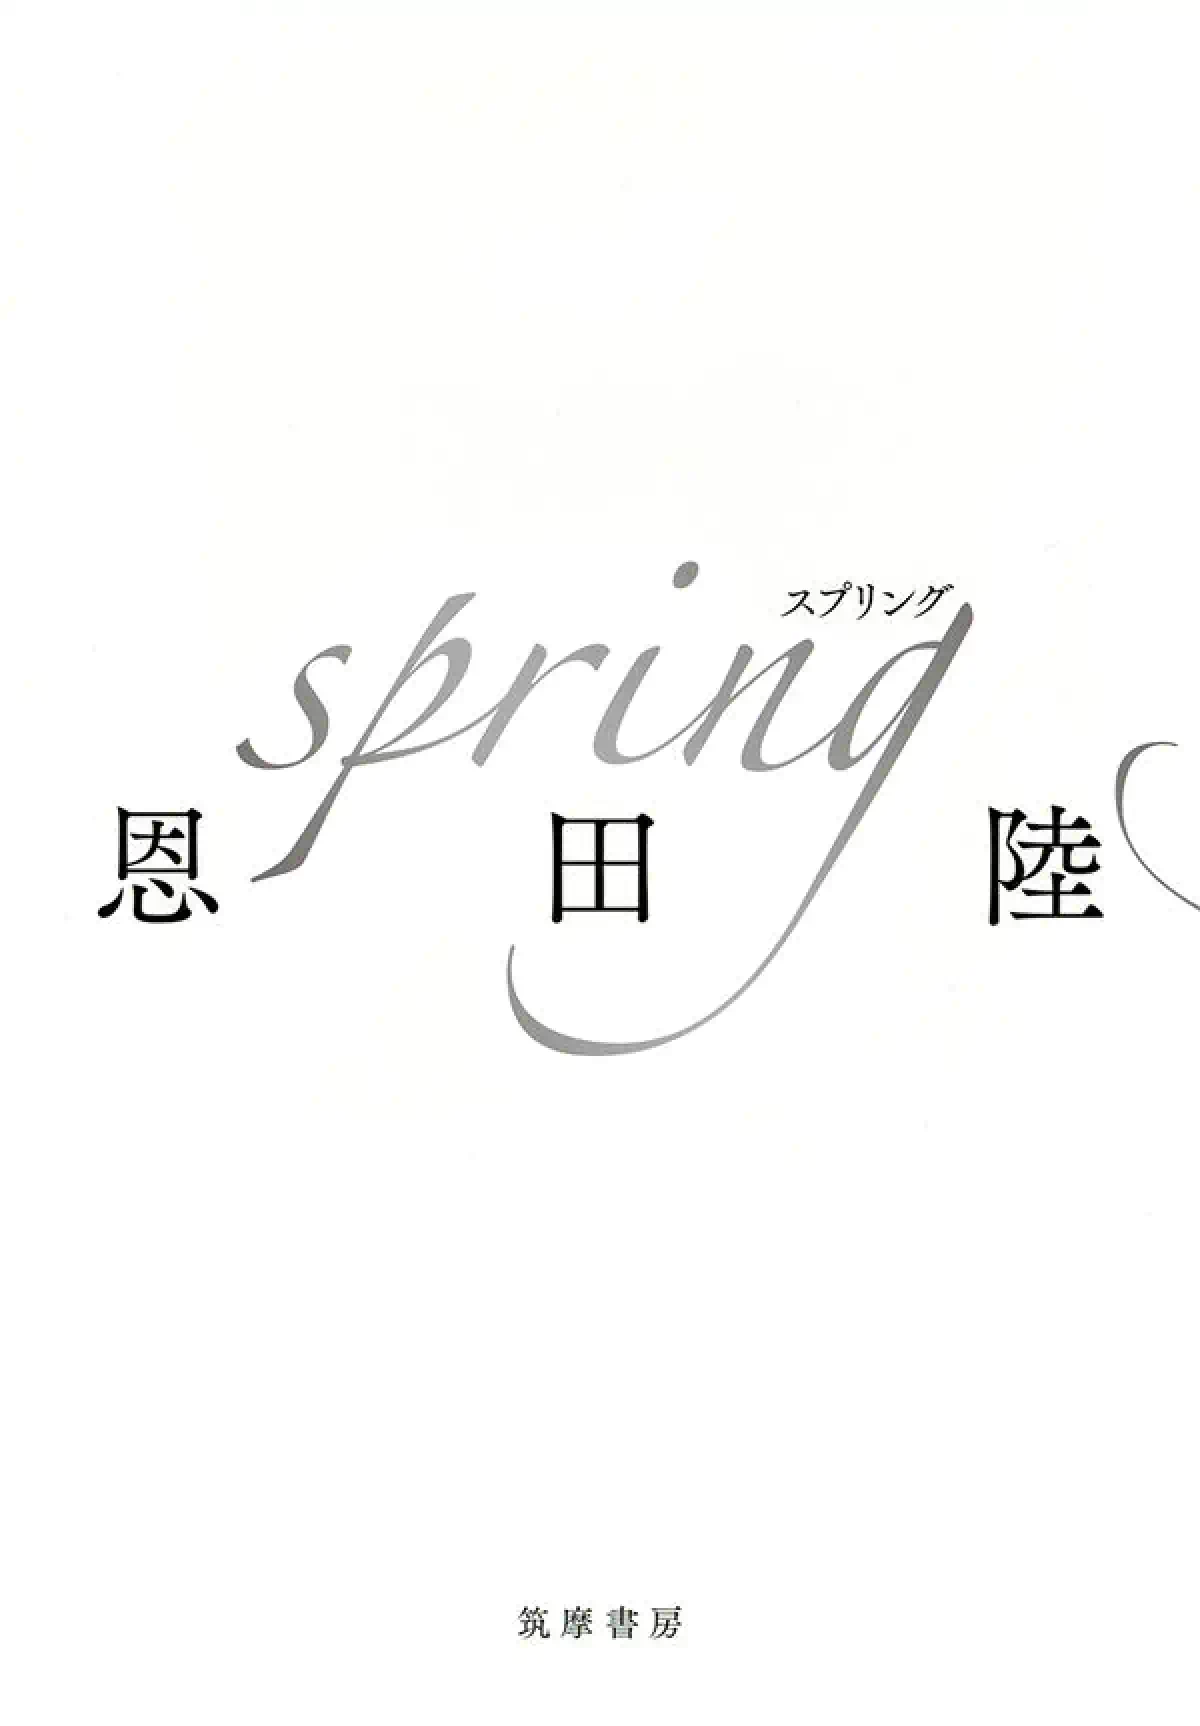 『spring』恩田陸 ブックデザイン